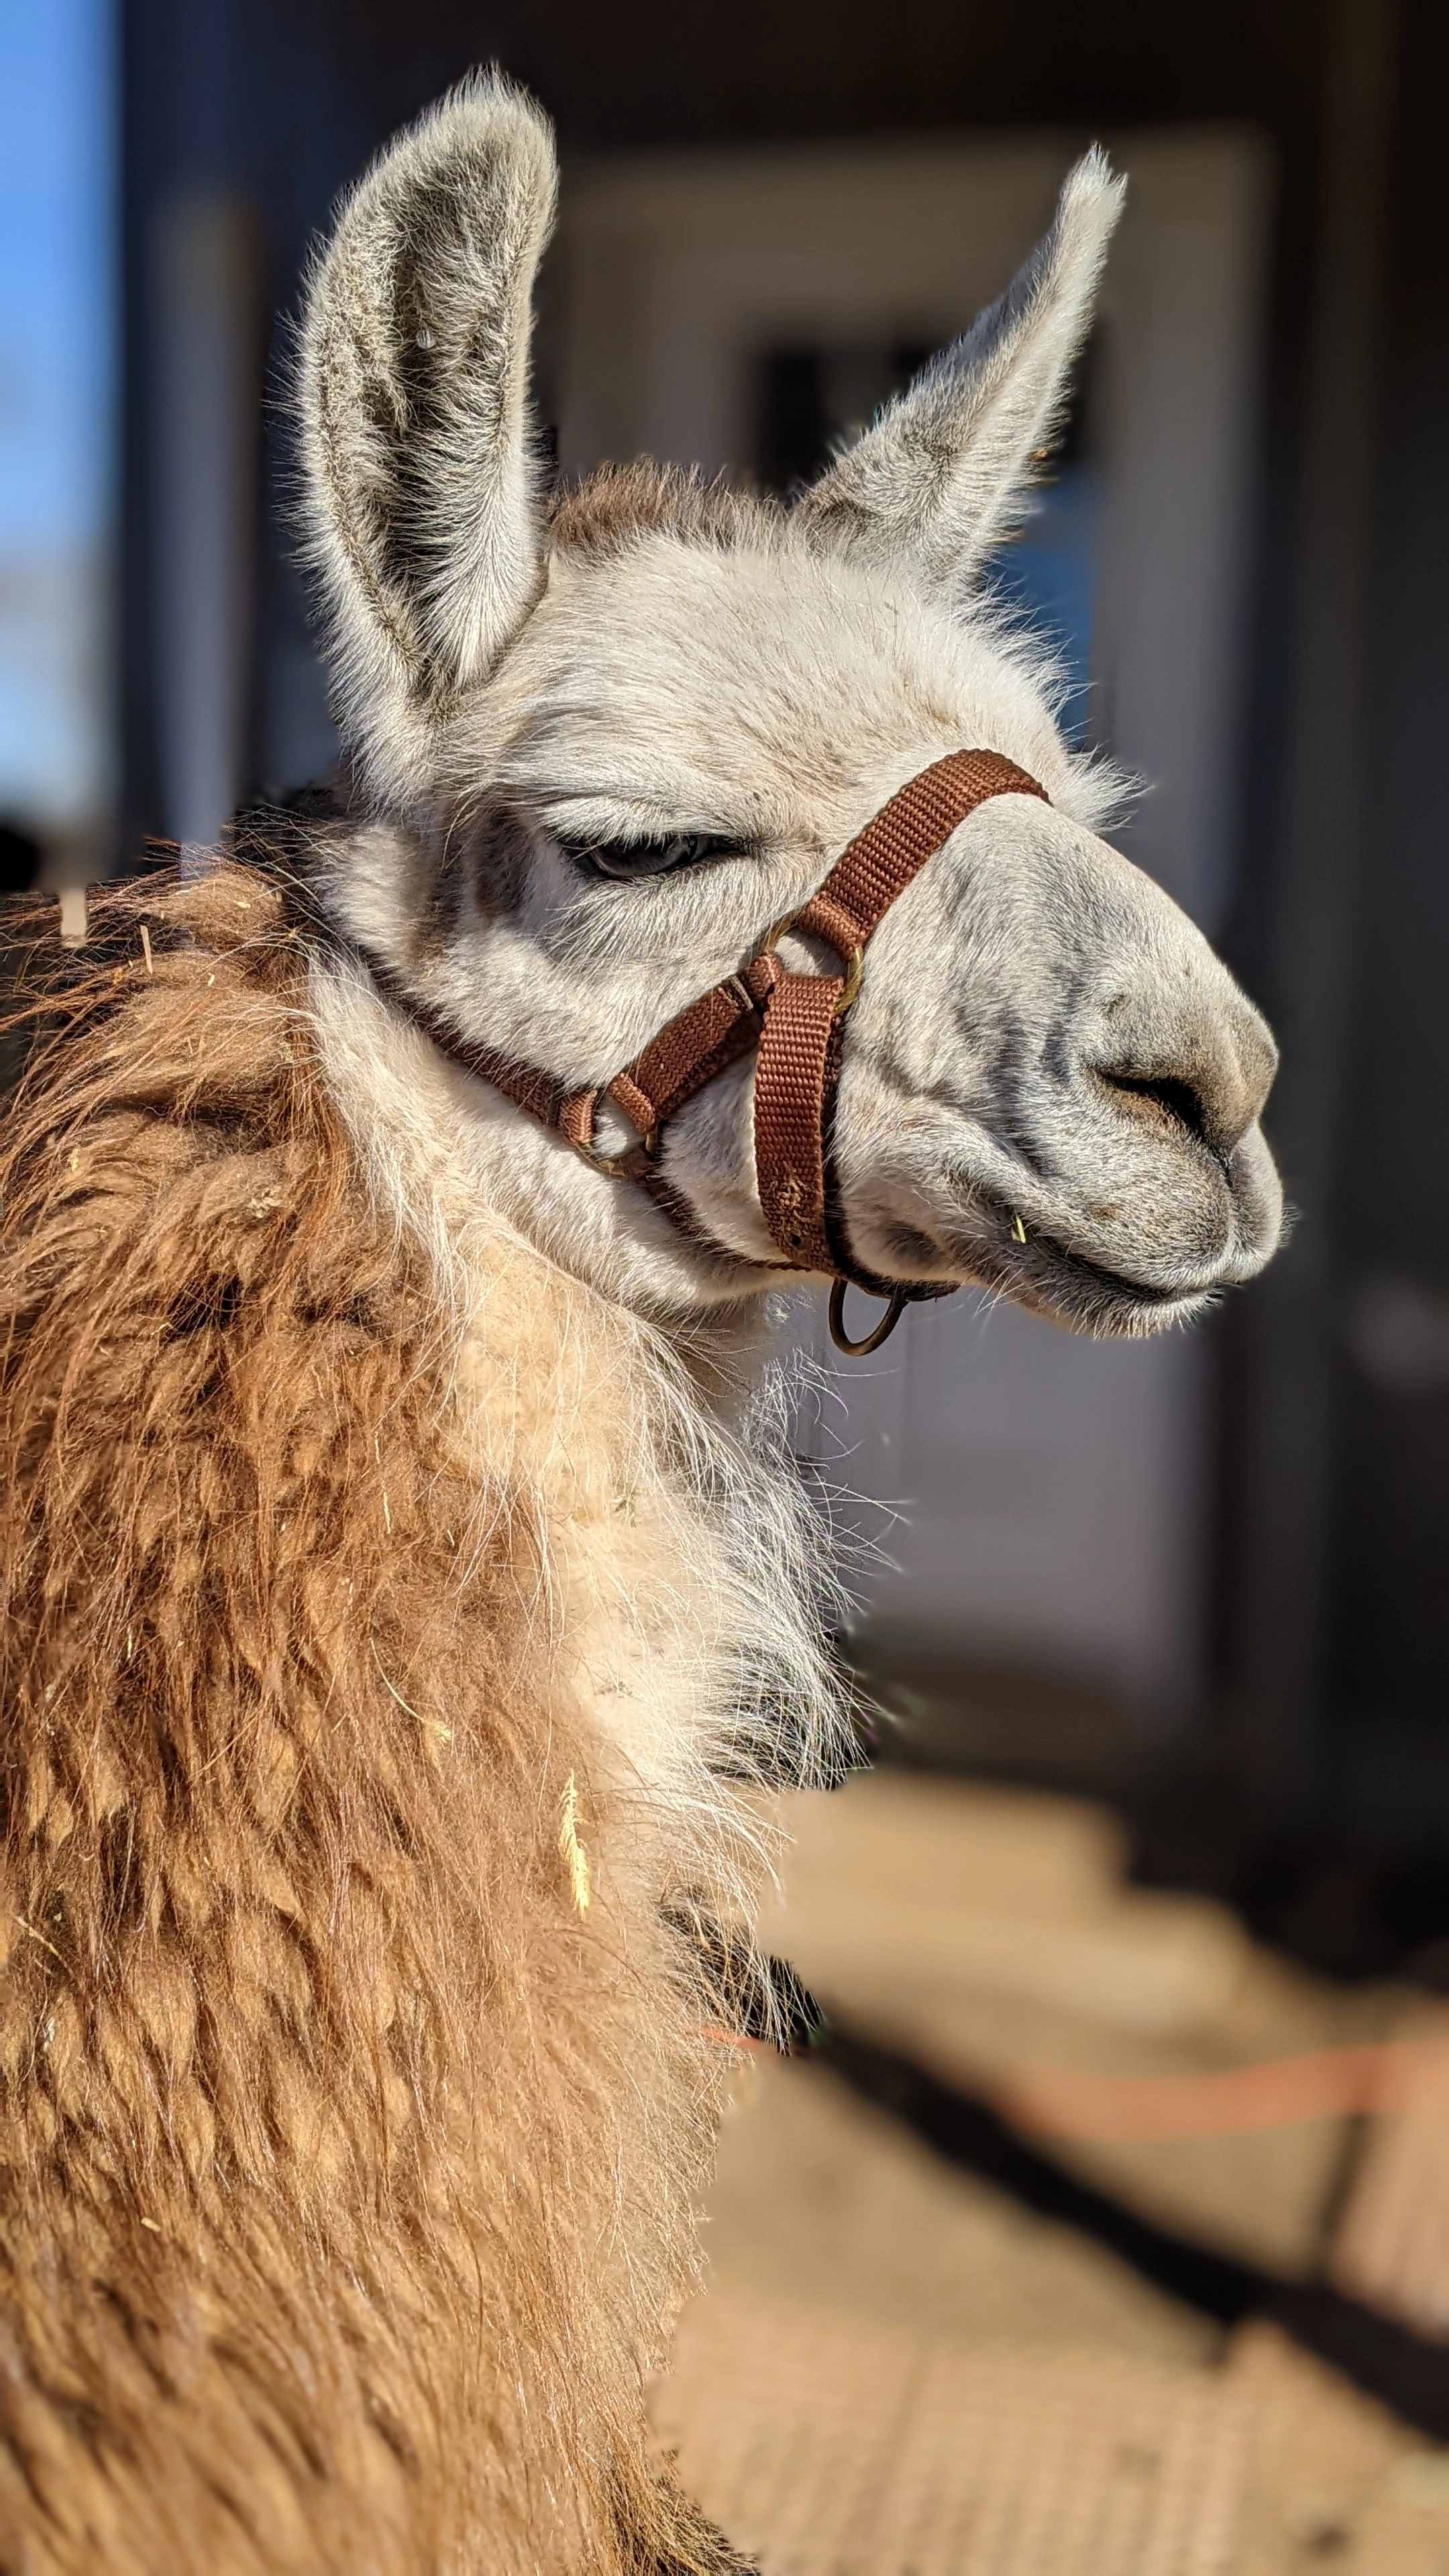 A portrait image of a llama named Lottie